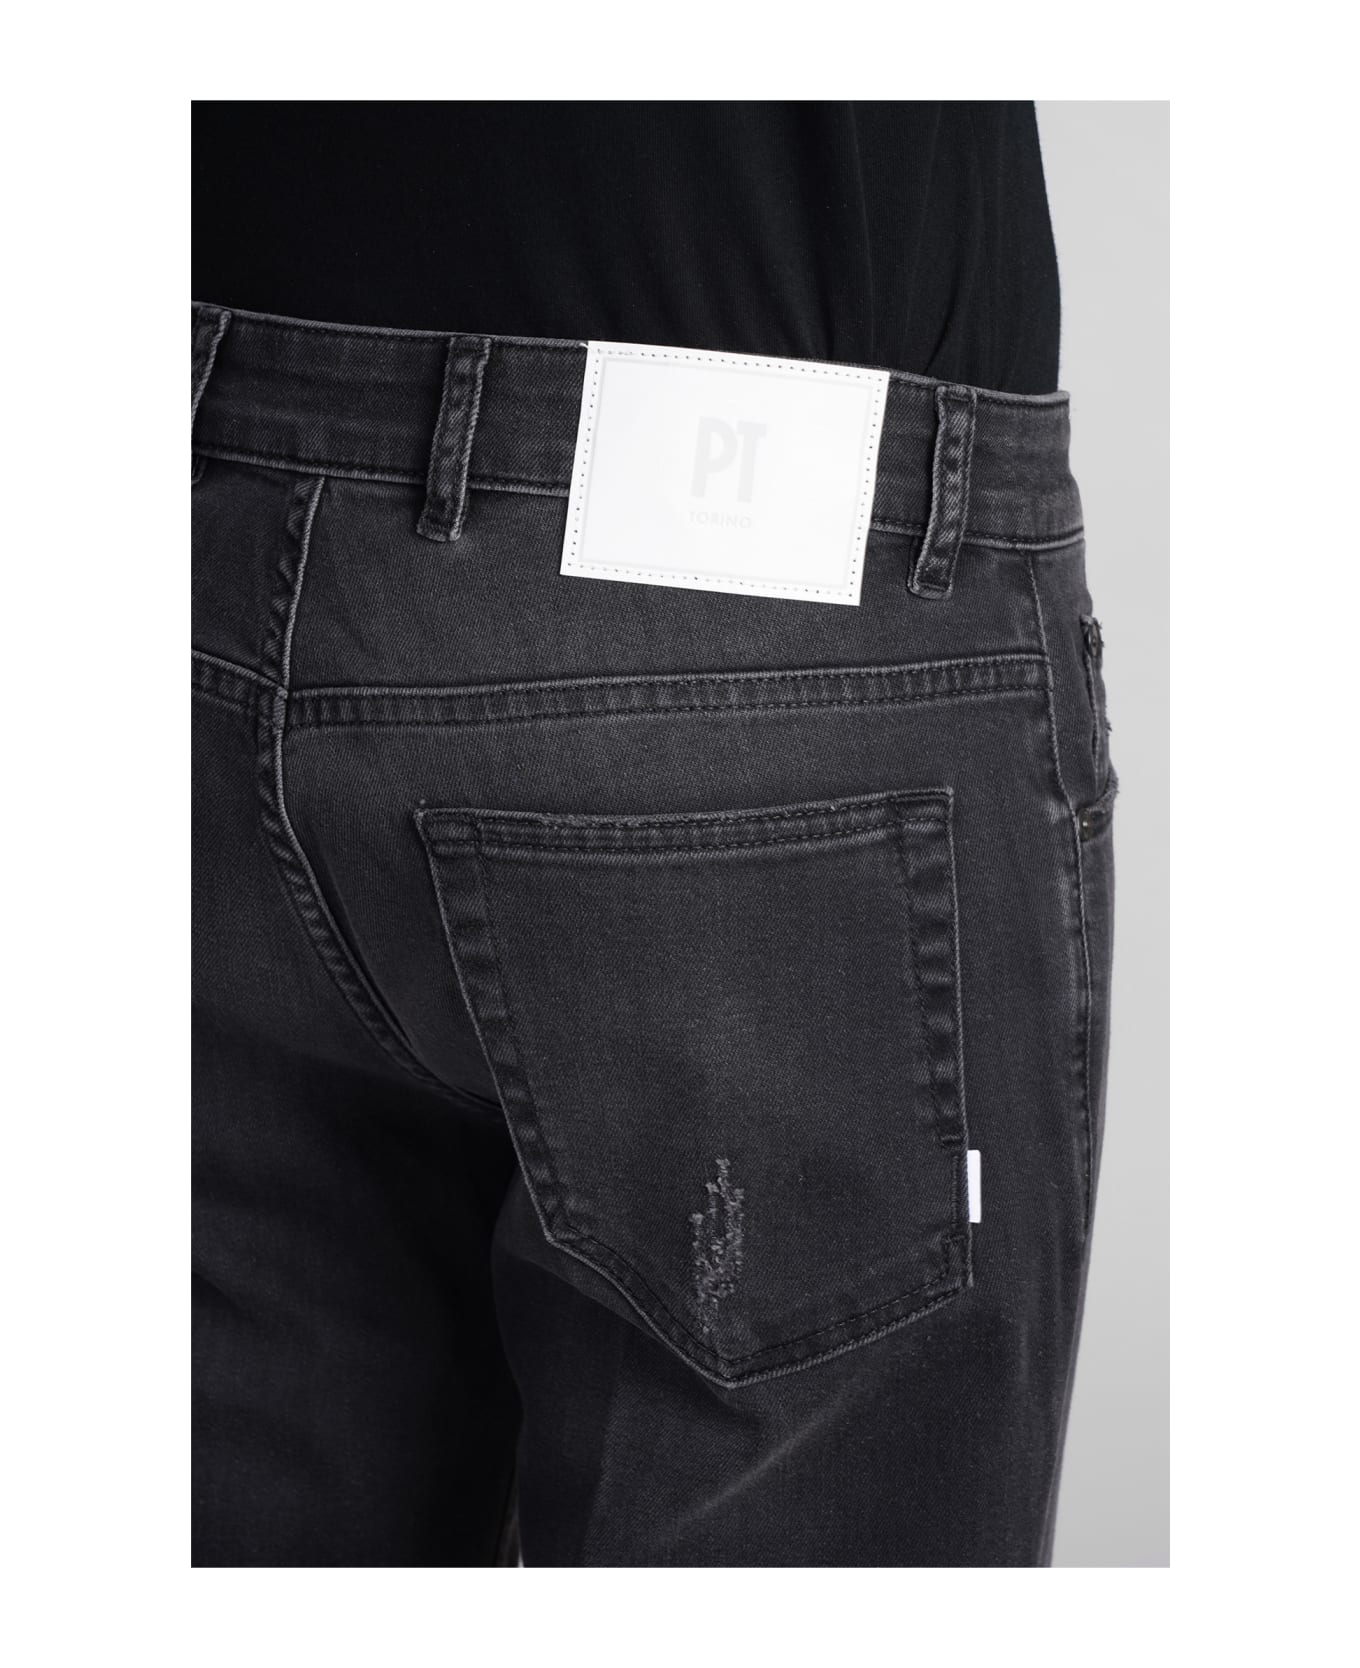 PT Torino Jeans In Black Cotton - black デニム